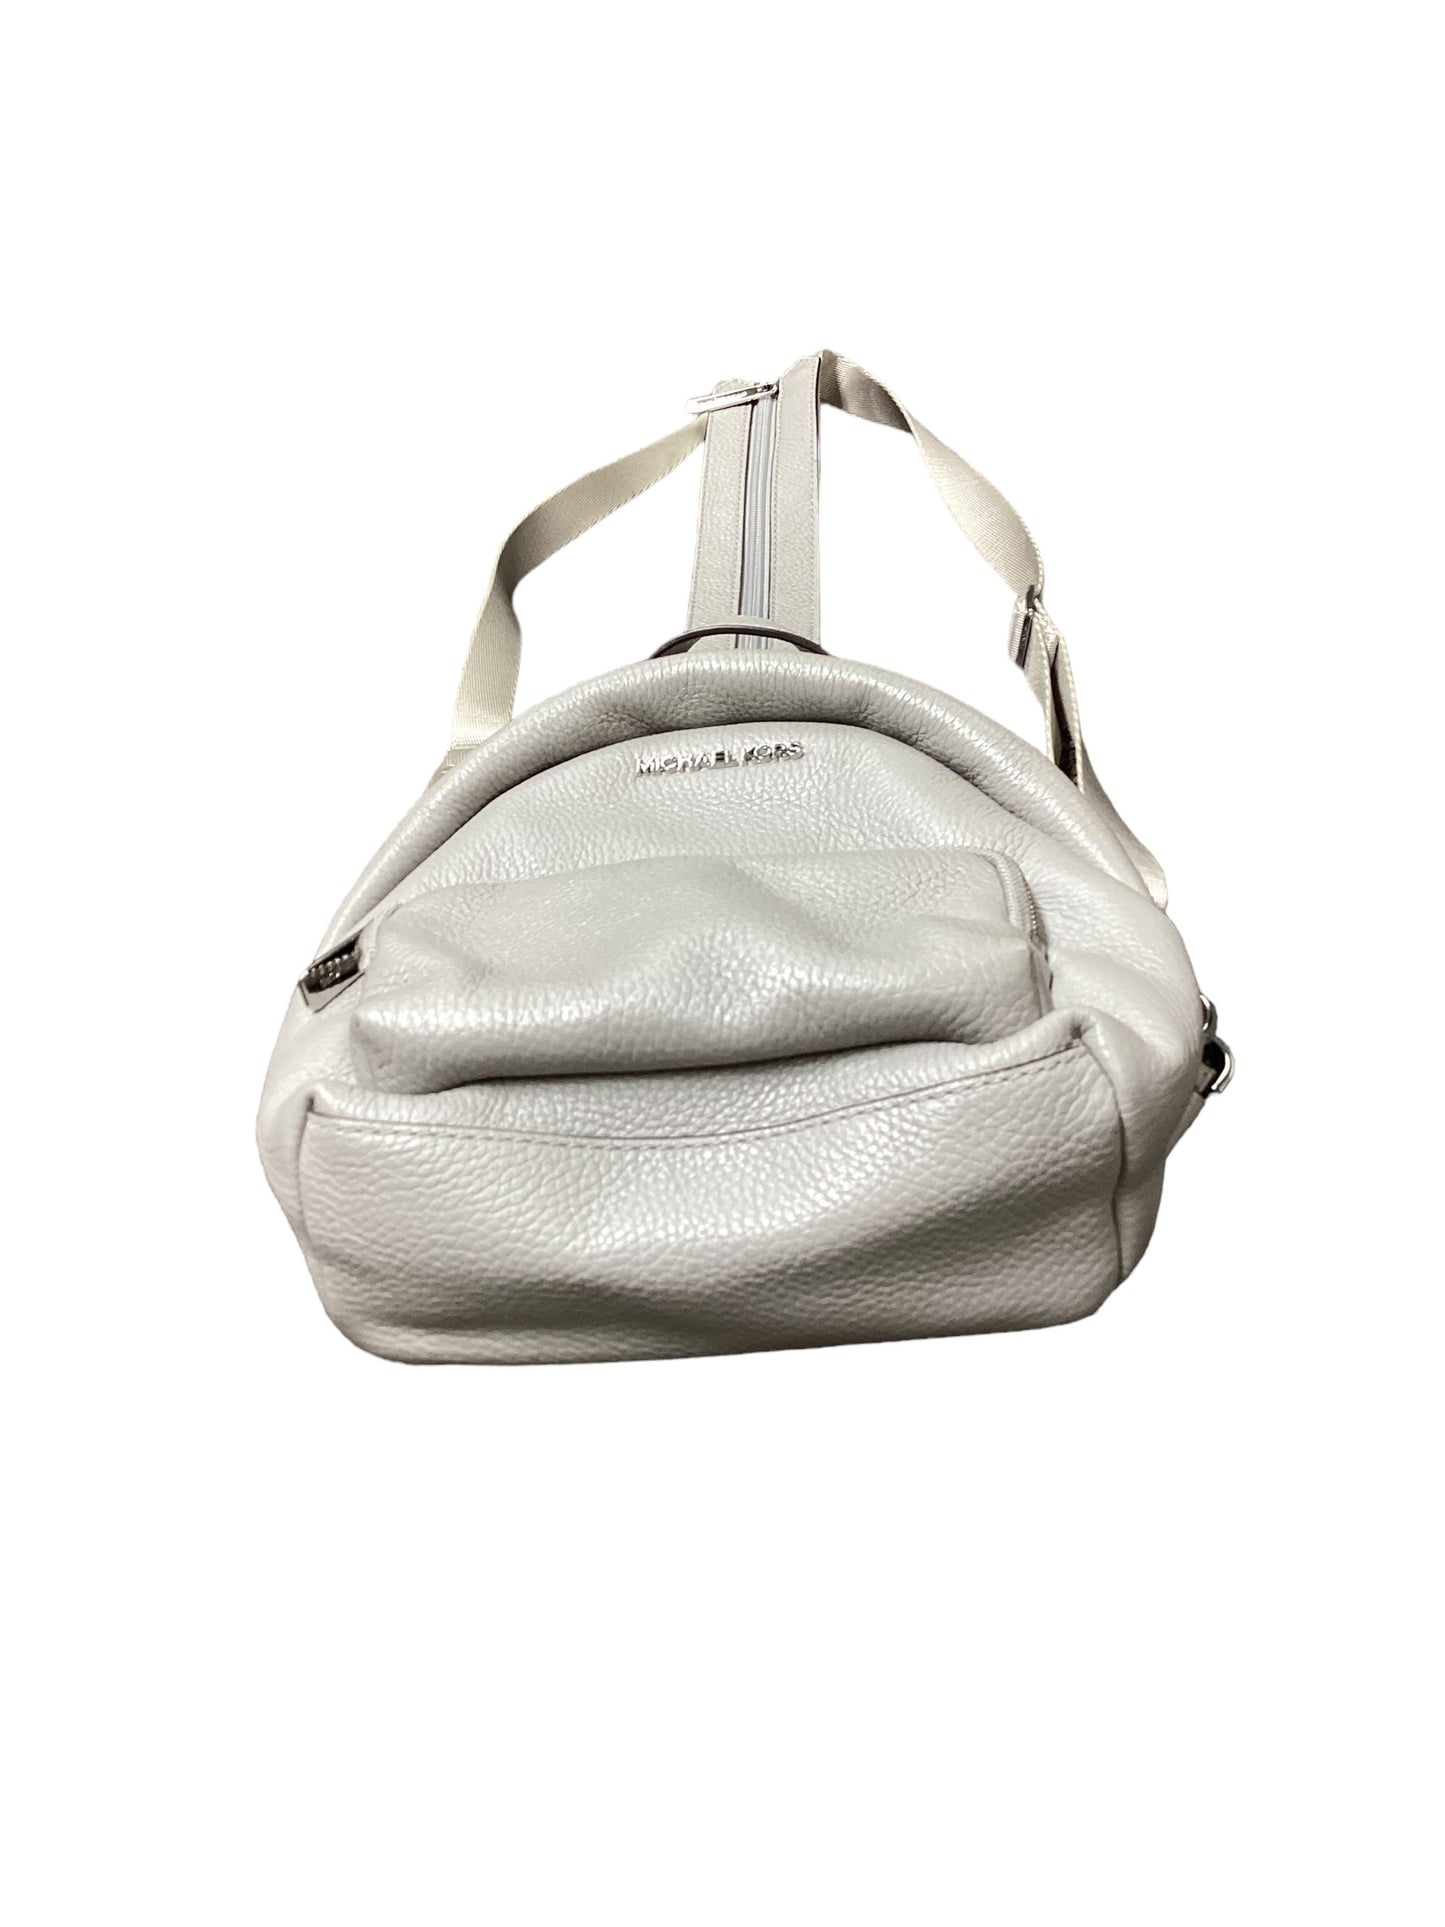 Backpack Designer Michael Kors, Size Small